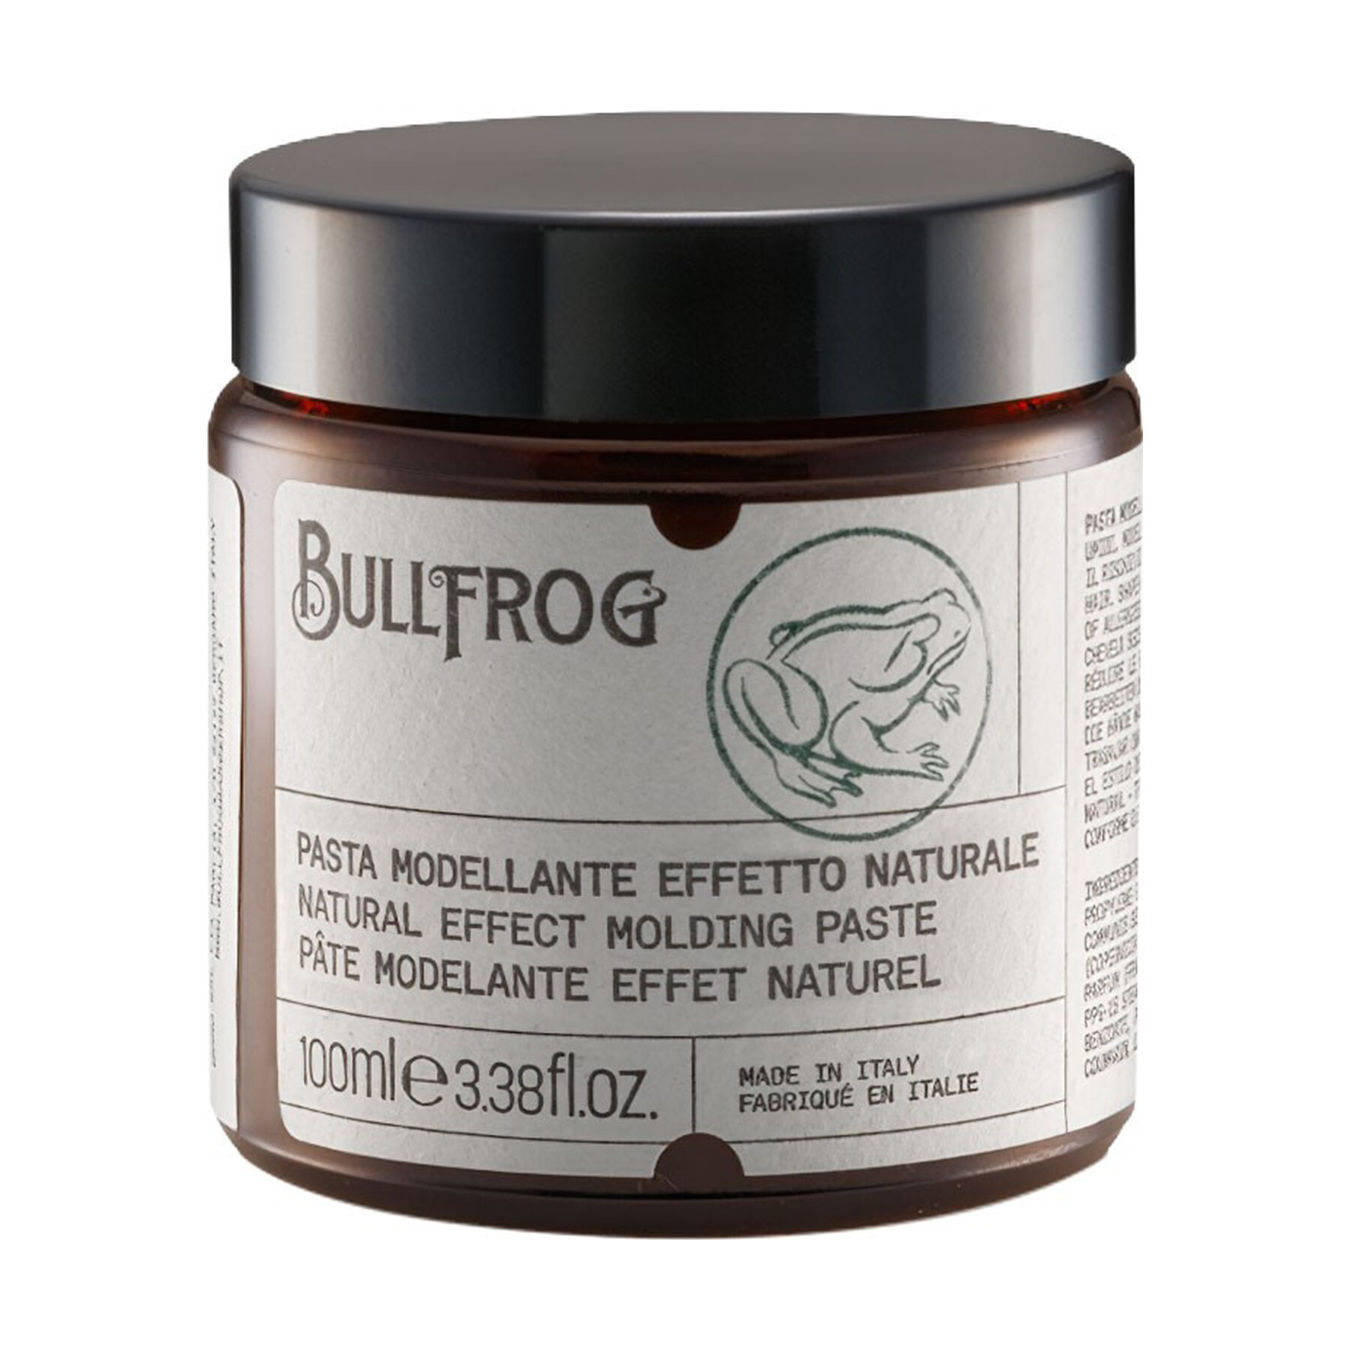 Bullfrog Natural Effect Molding Paste von Bullfrog